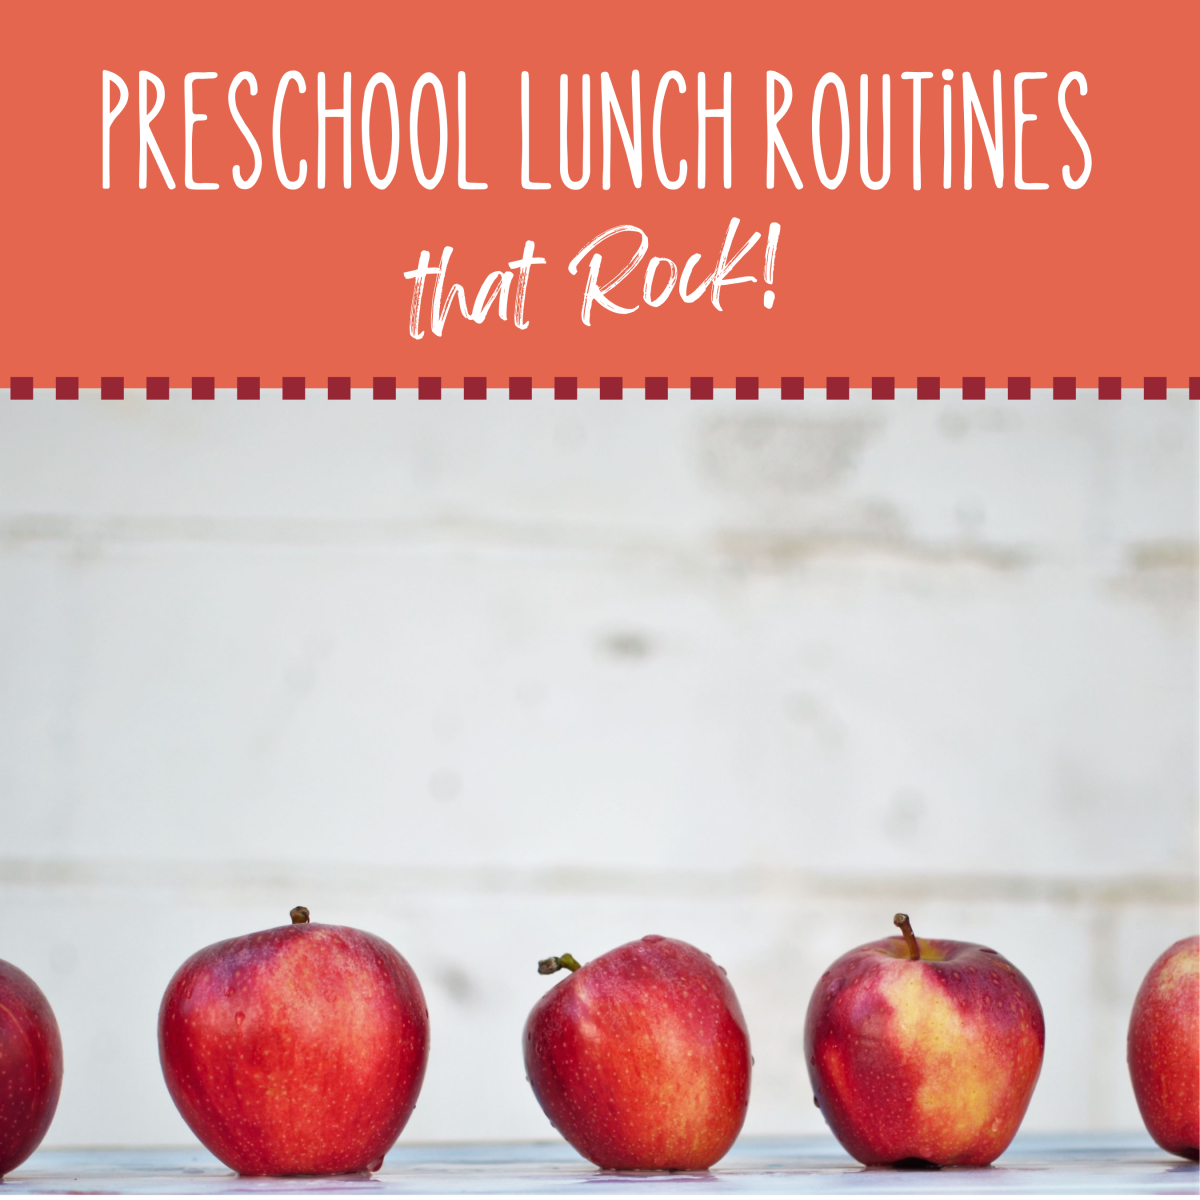 Preschool Lunch Routines That Rock